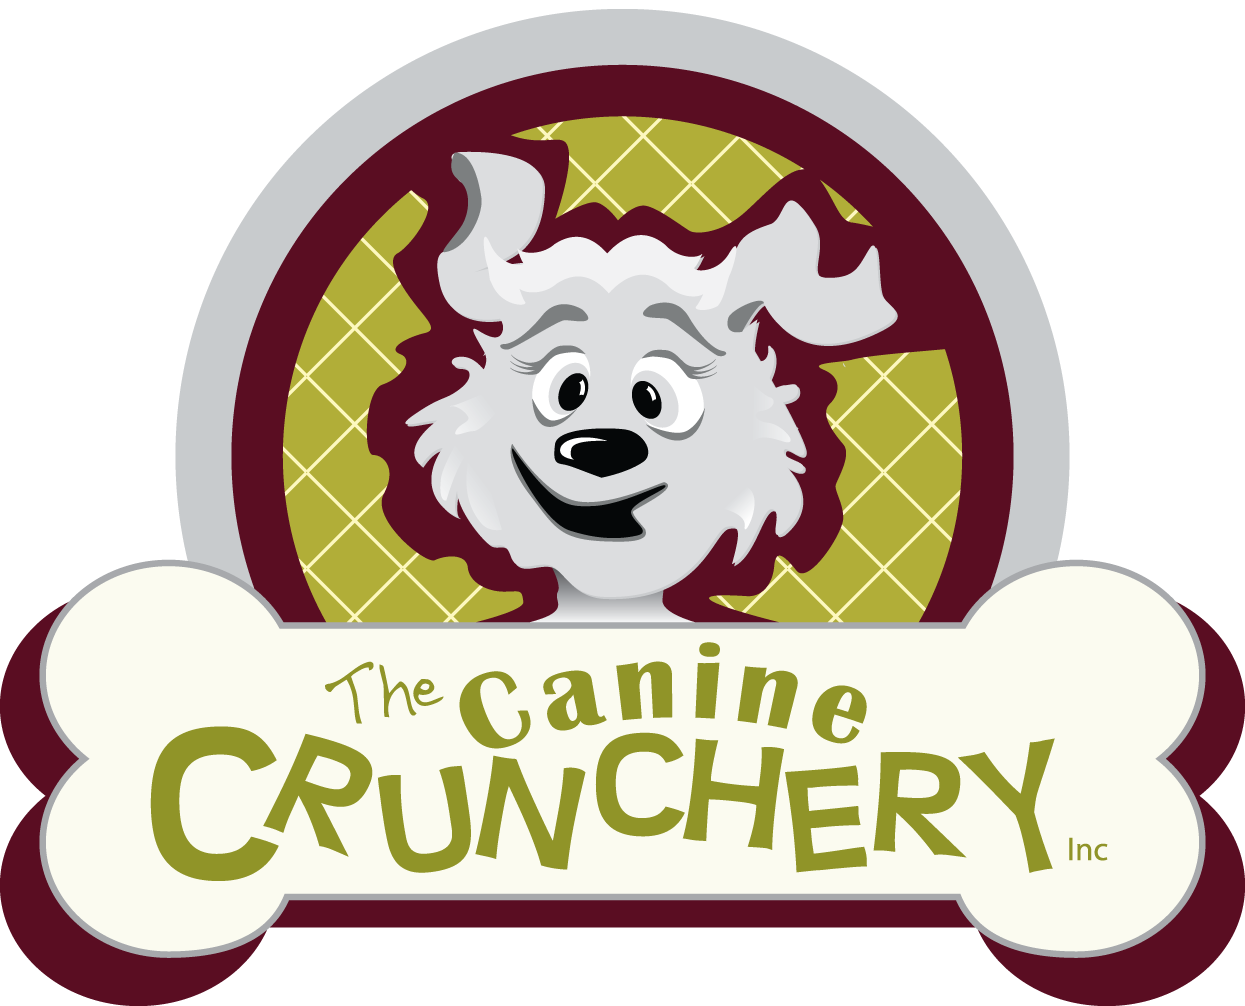 The Canine Crunchery, Inc.